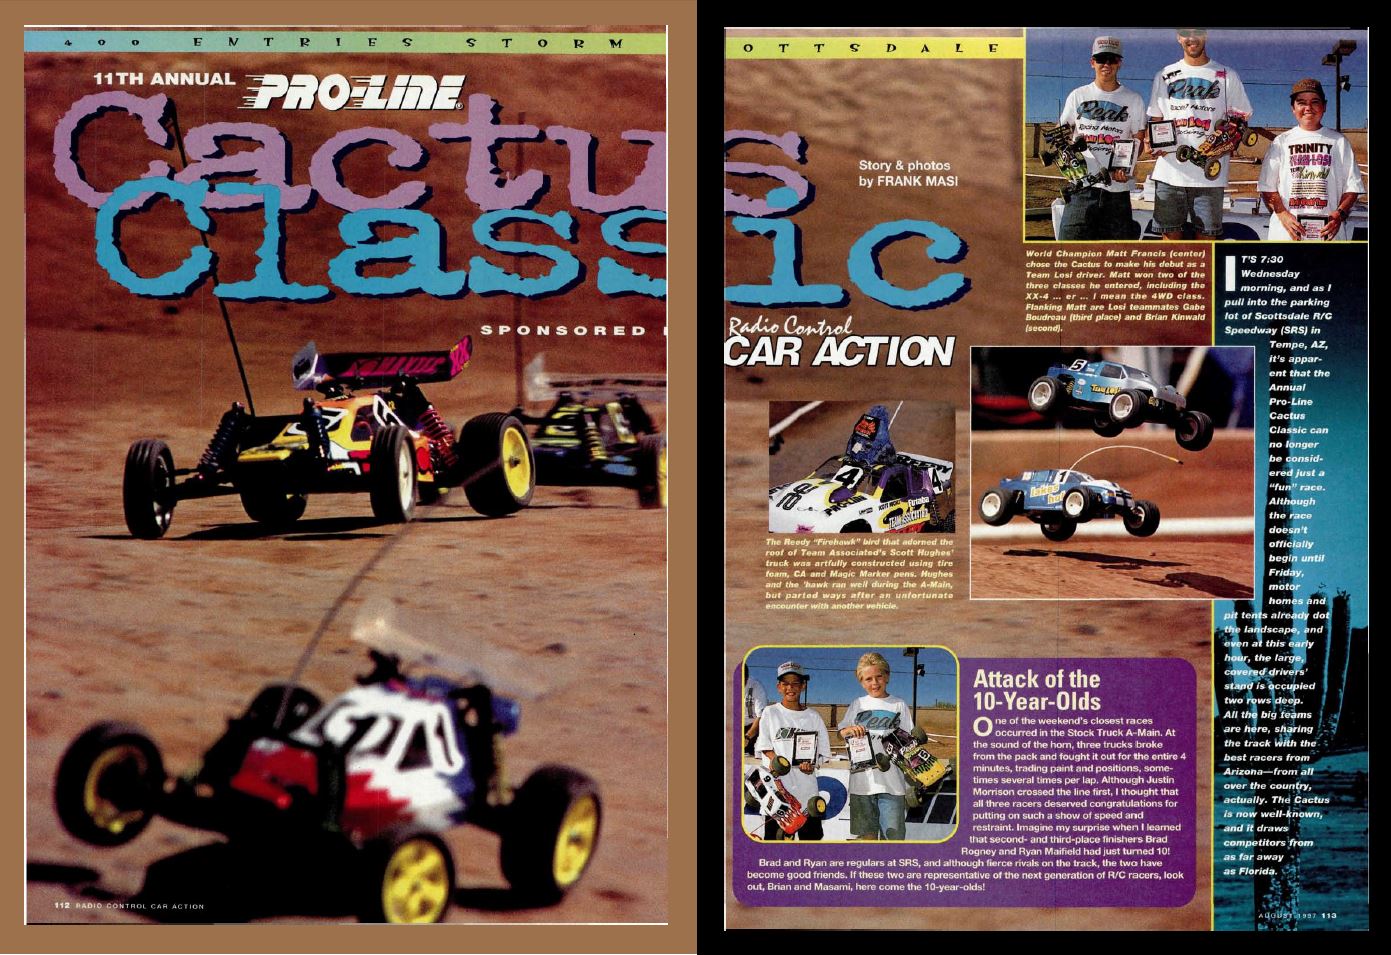 RC Car Action - RC Cars & Trucks | #TBT The 11th Annual Cactus Classic